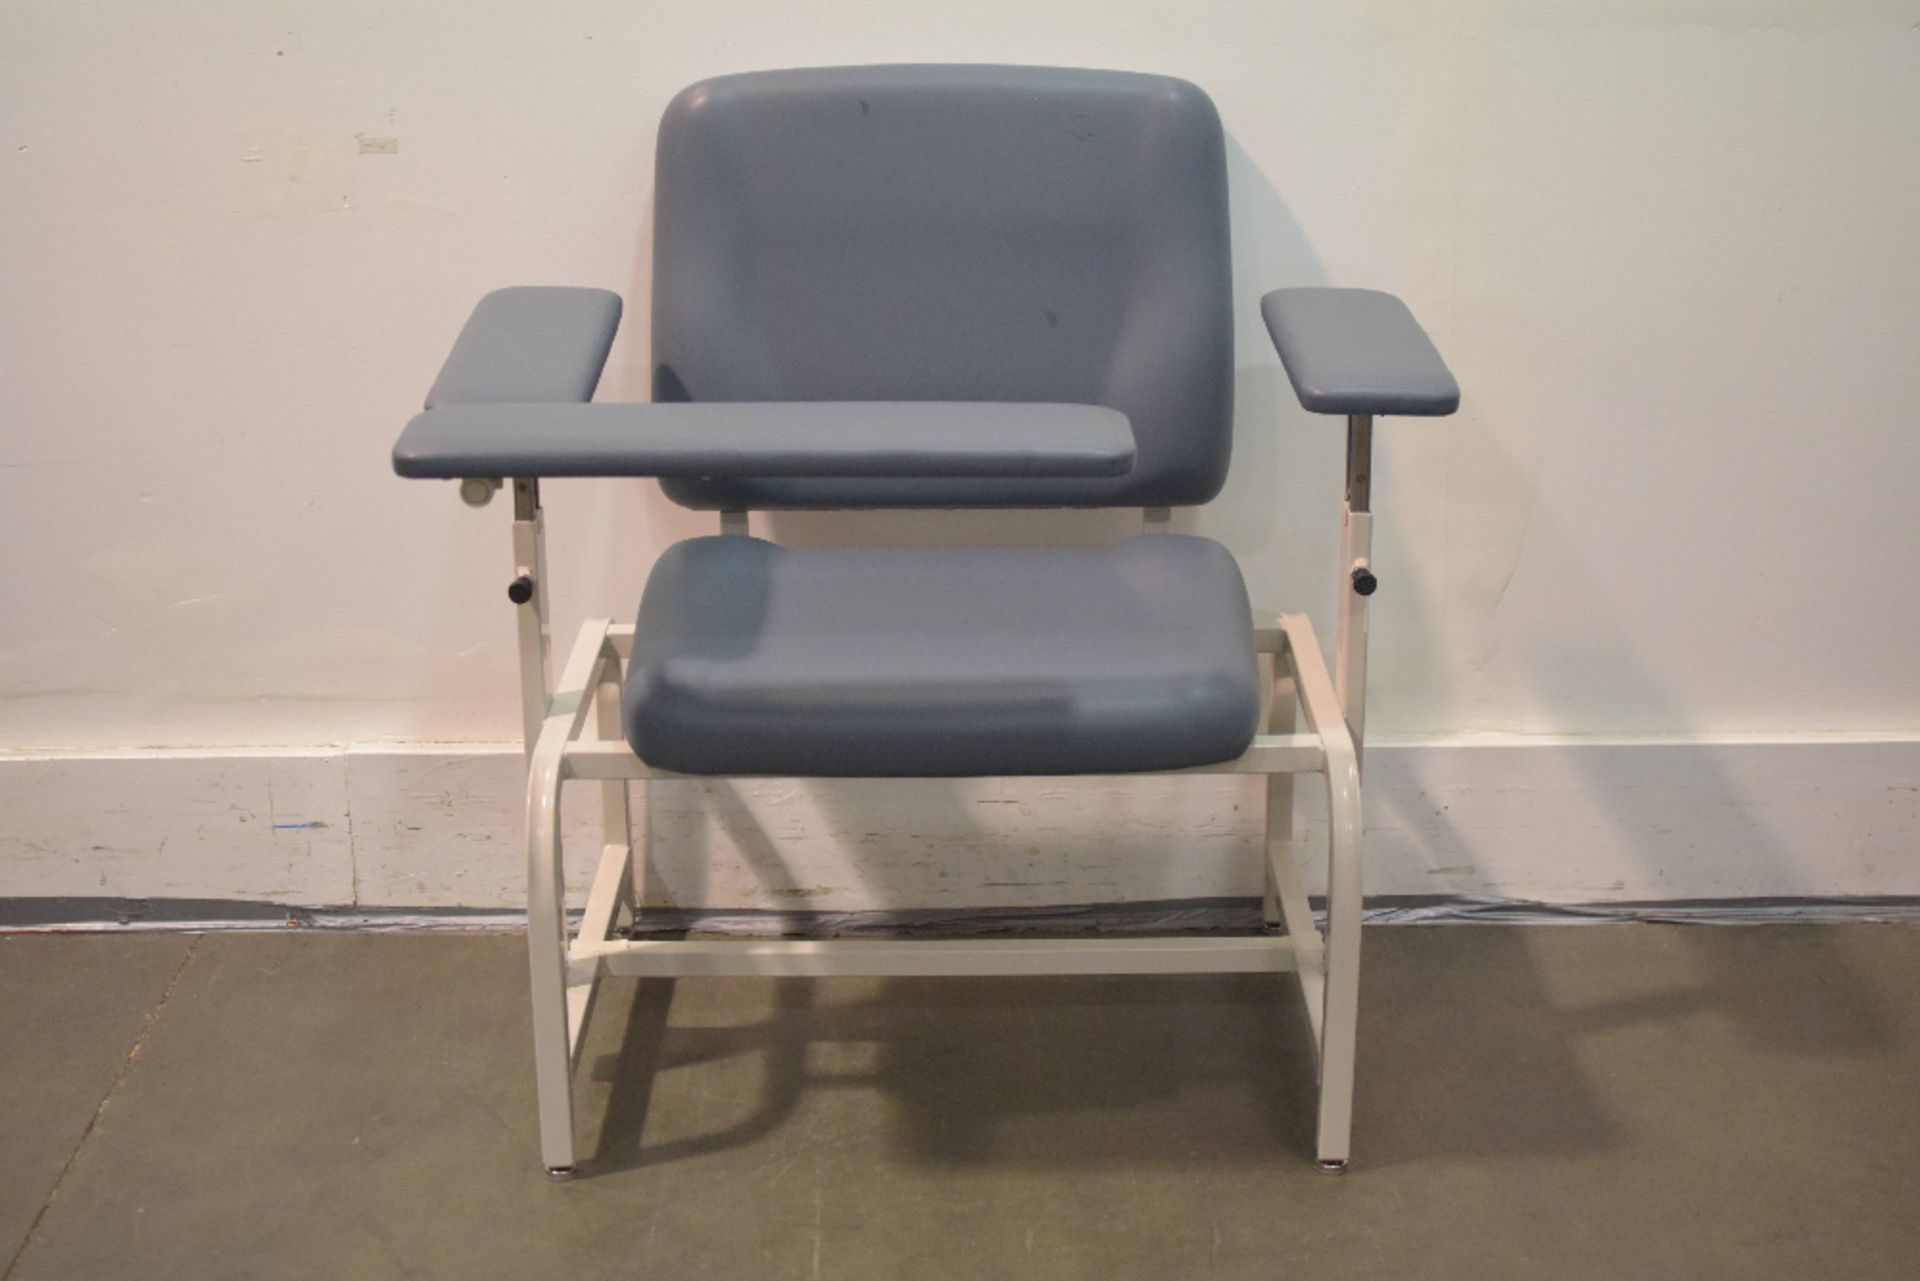 UMF Medical 8690 Exam Chair